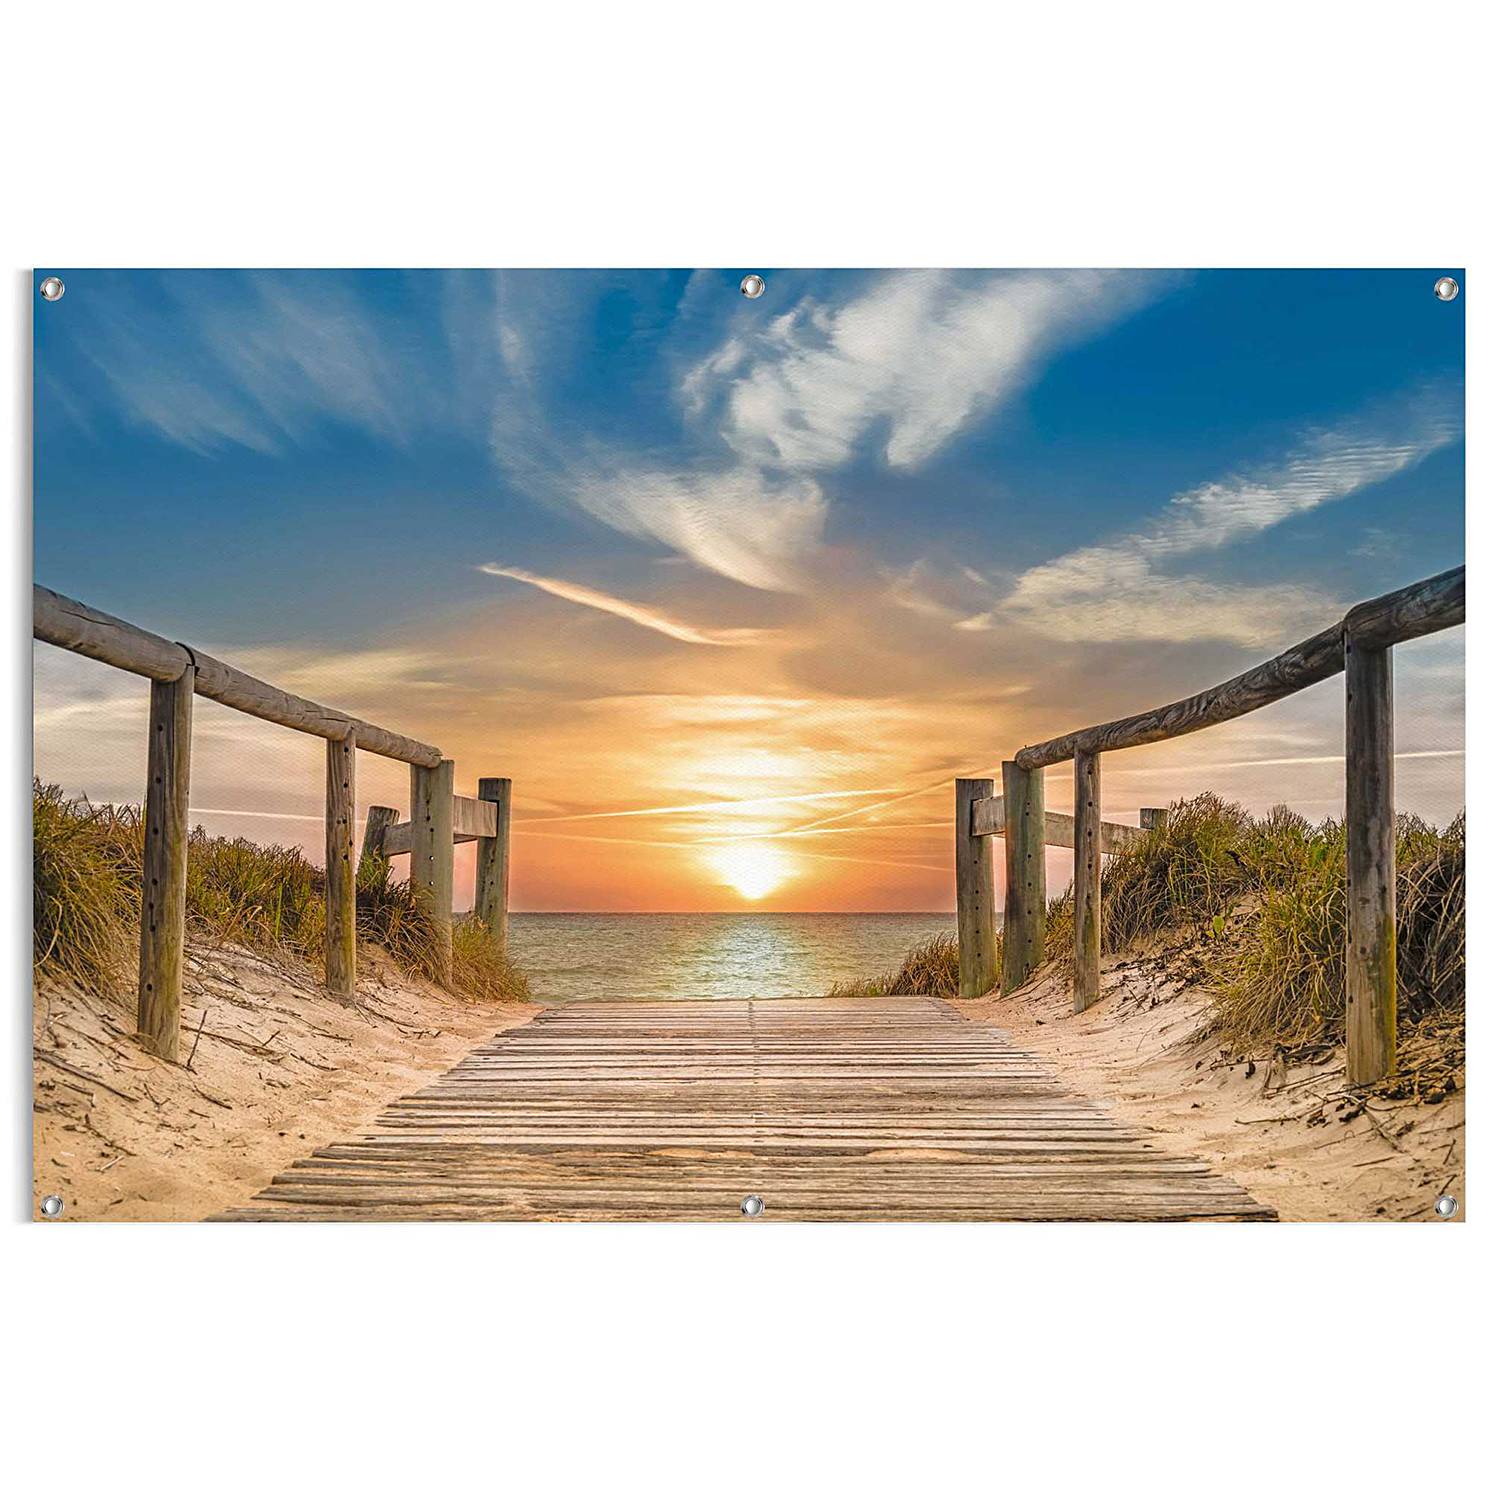 Outdoor-Poster Sonnenuntergang am Strand kaufen | home24